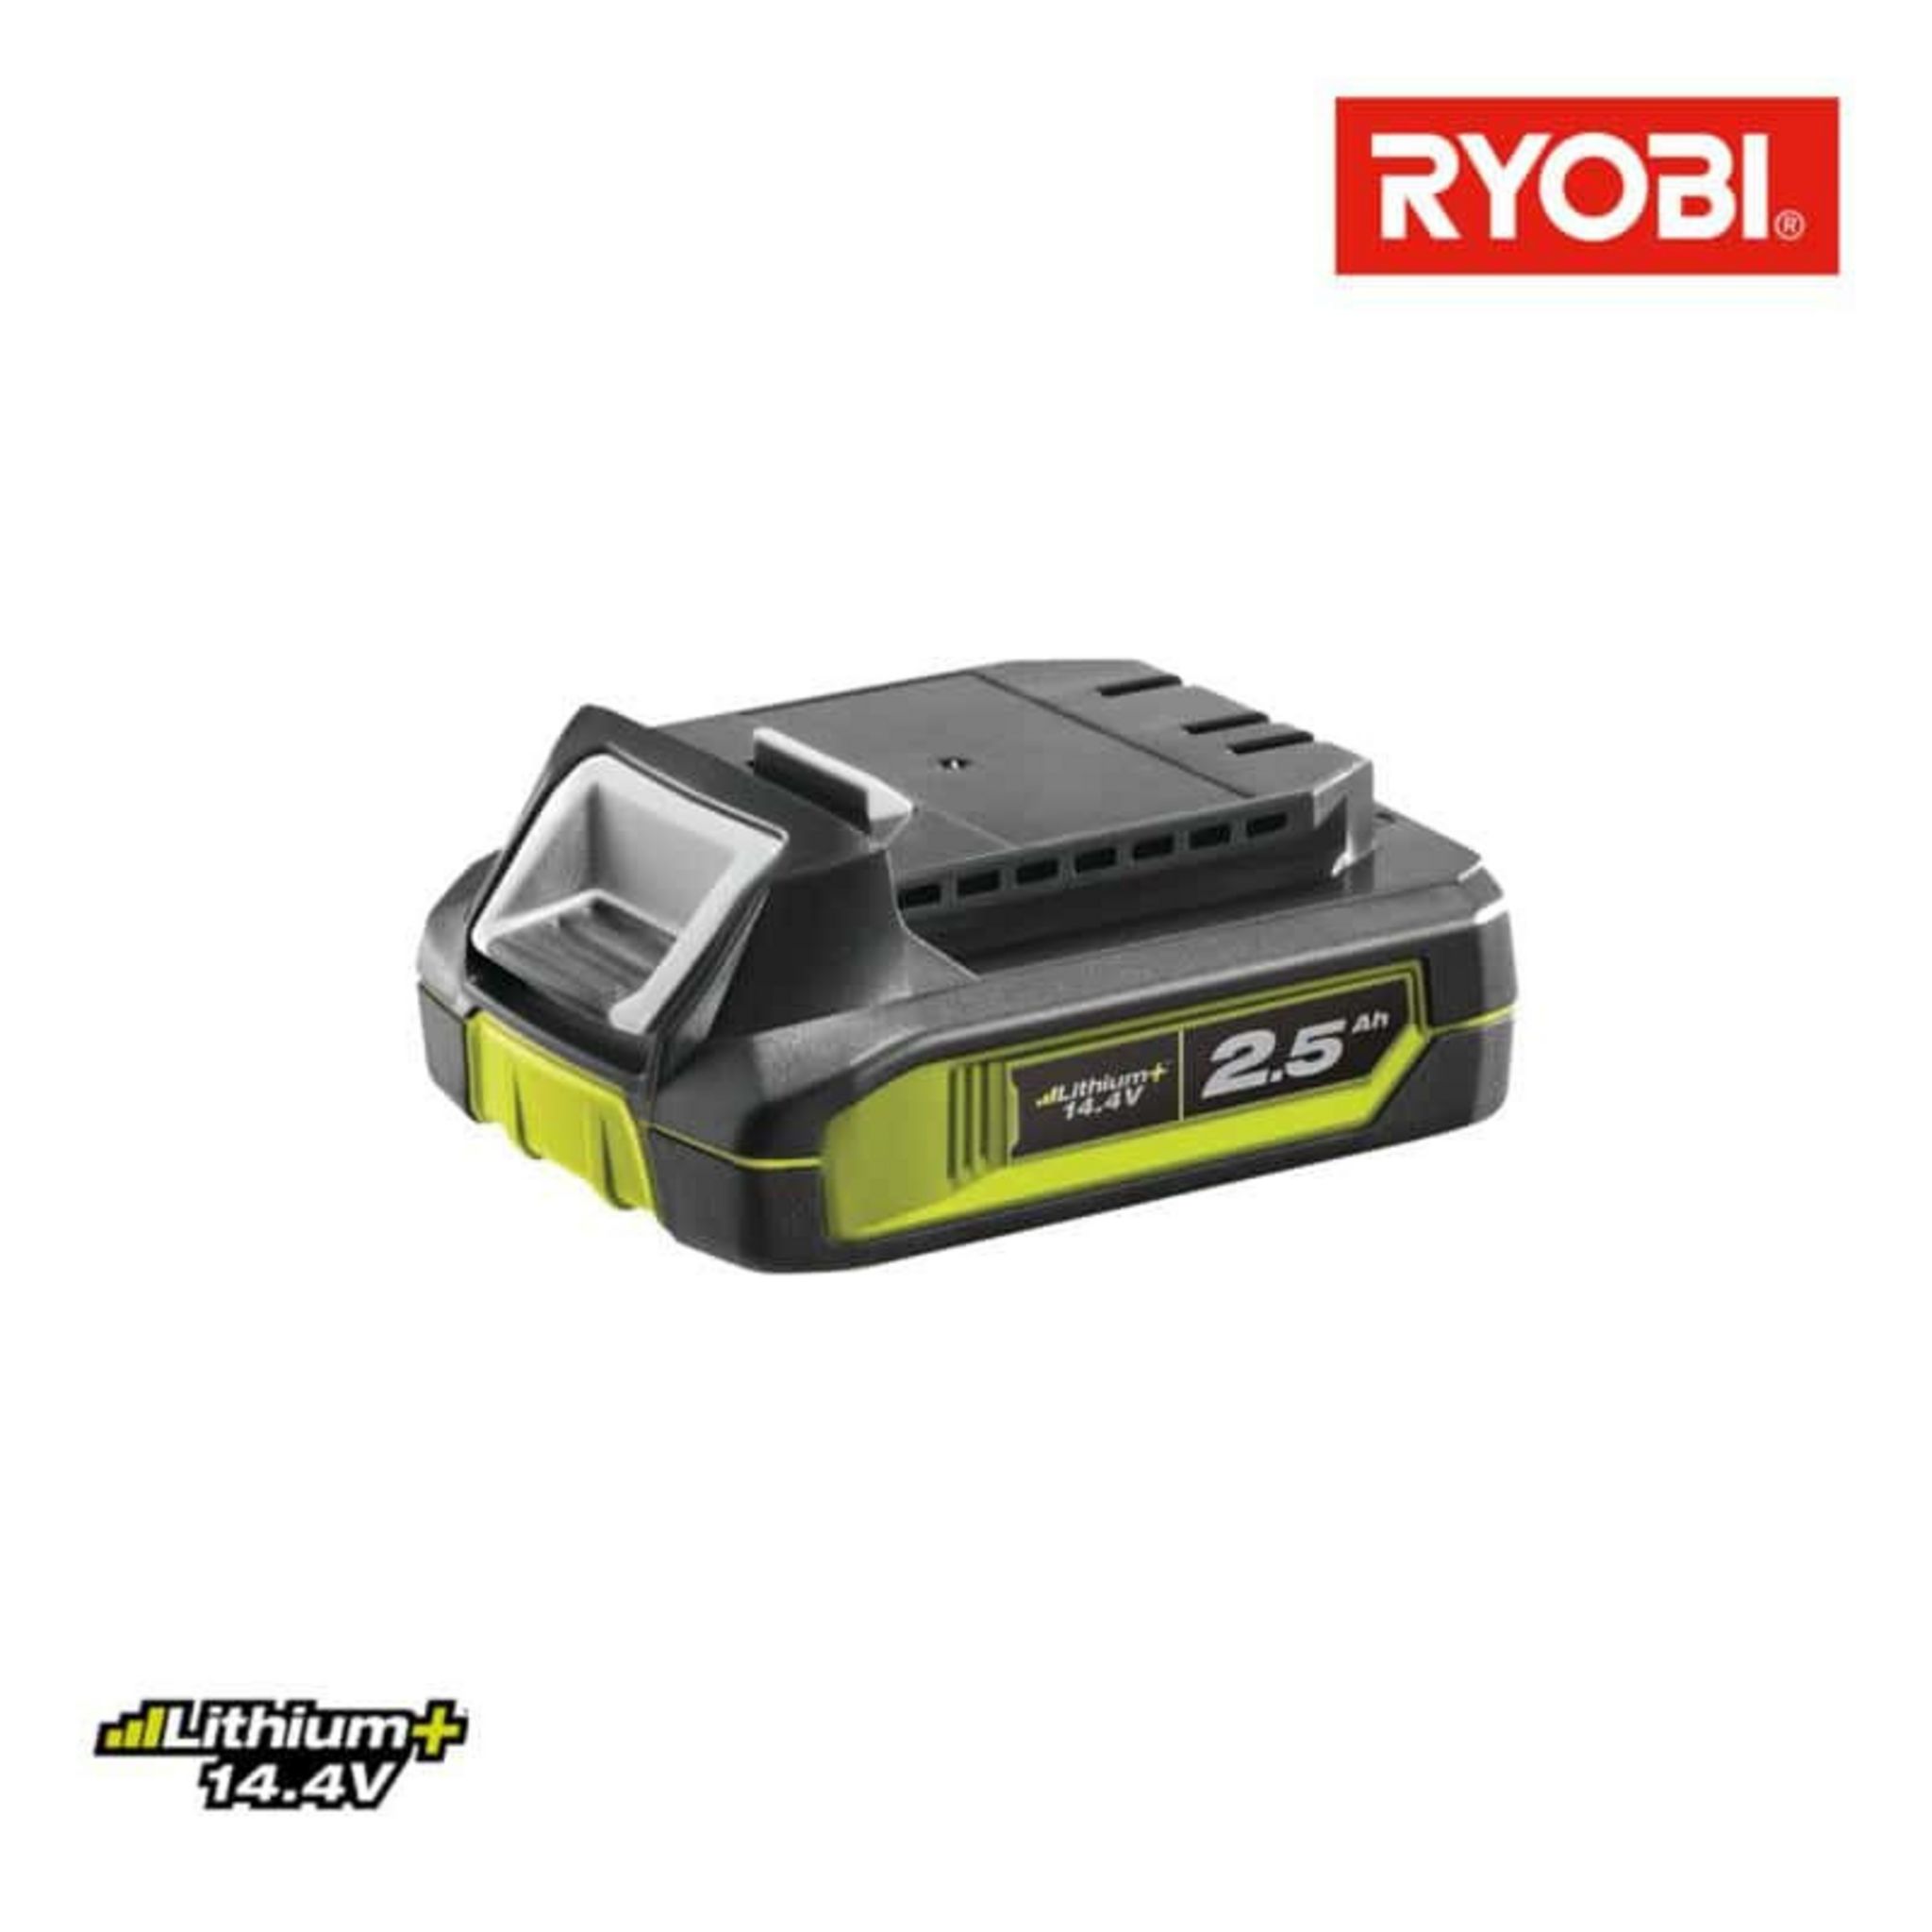 Ryobi Batterie RYOBI 14,4V - 2.5Ah LithiumPlus RB14L25 pas cher 